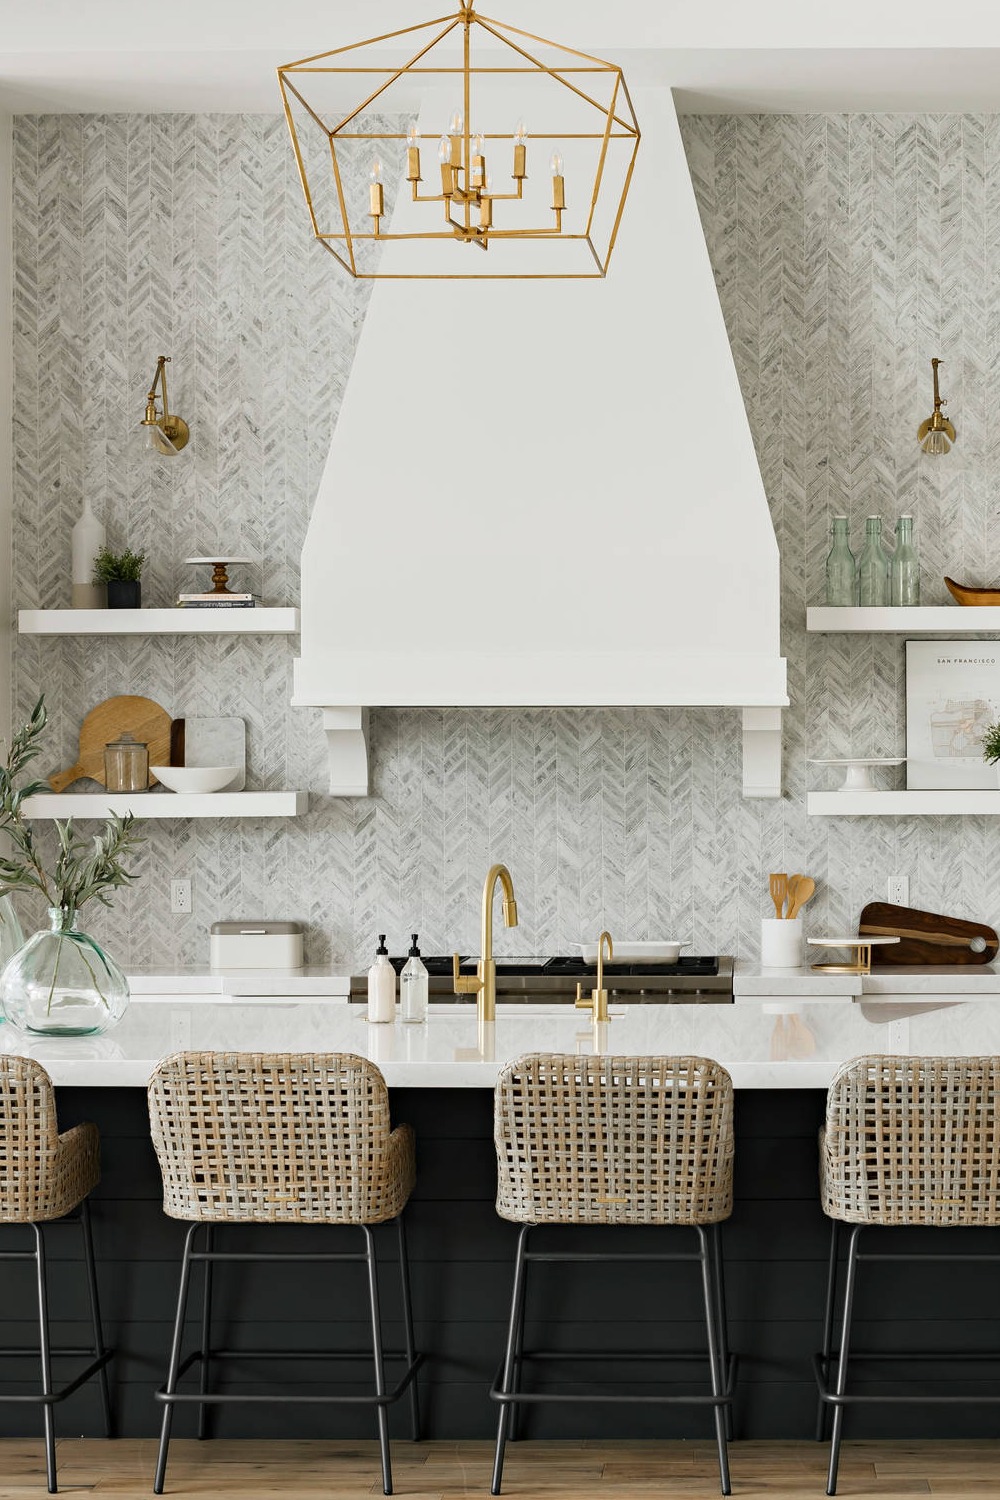 White And Gray Chevron Backsplash Tile Cabinets Walls Modern Wood Floor Light Style Interior Add Cart